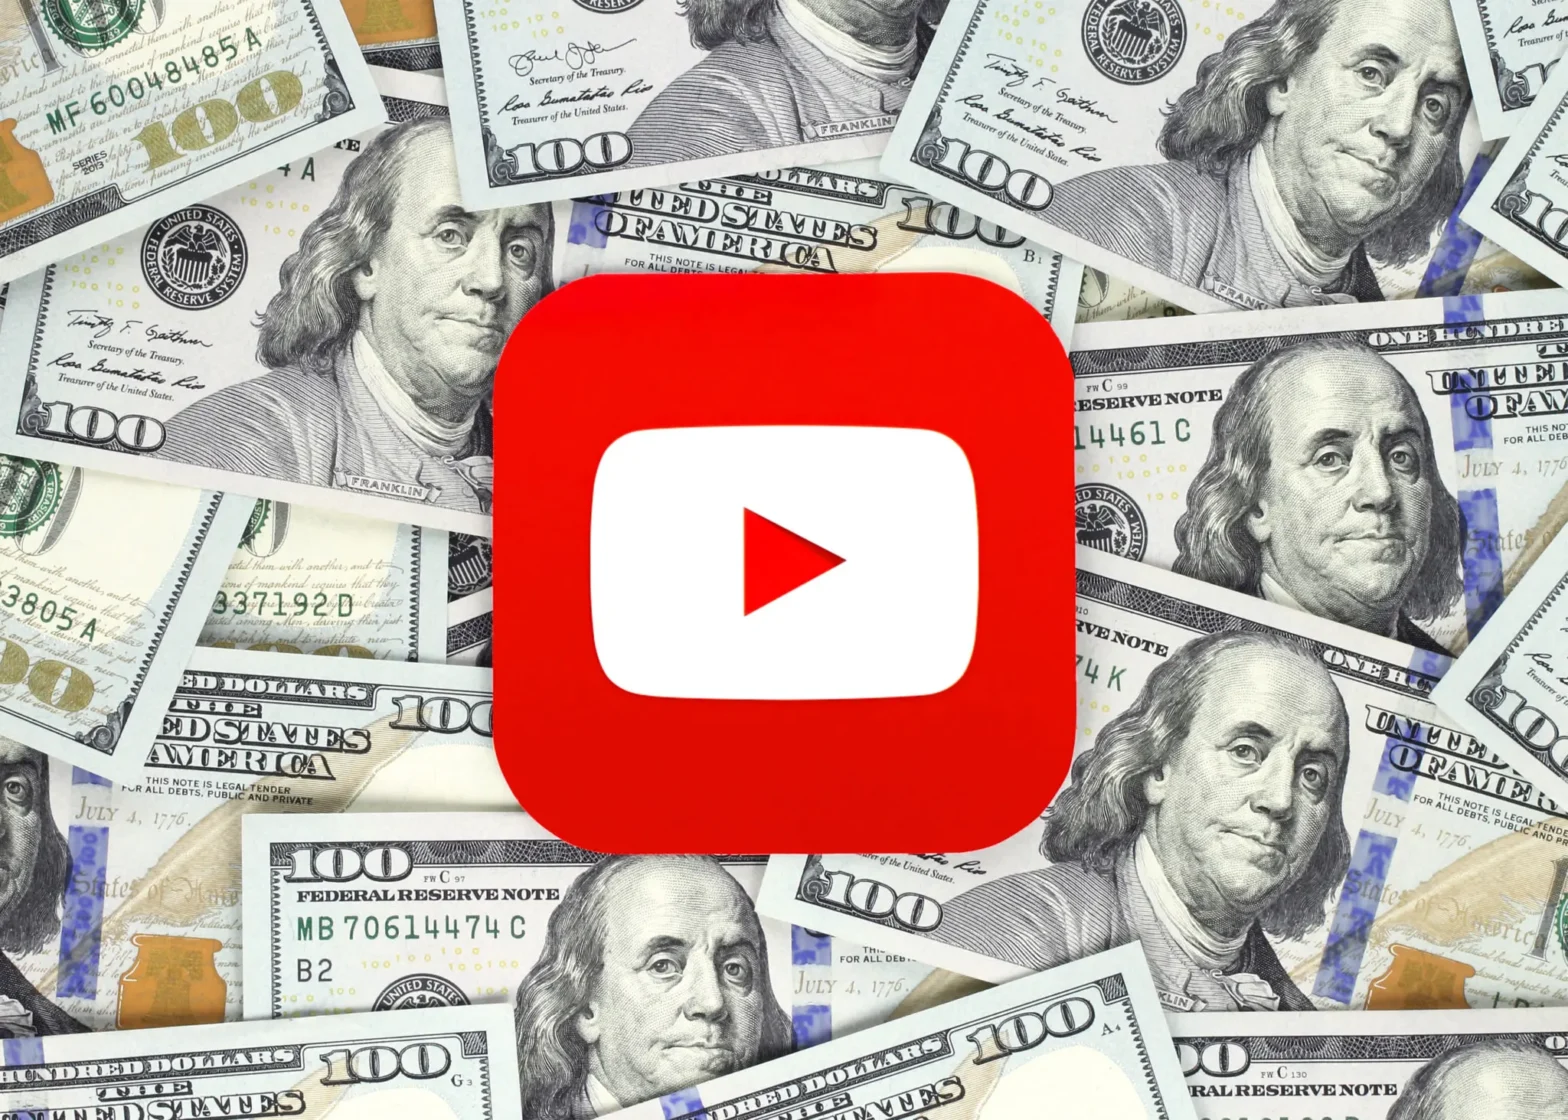 YouTube monetization requirements